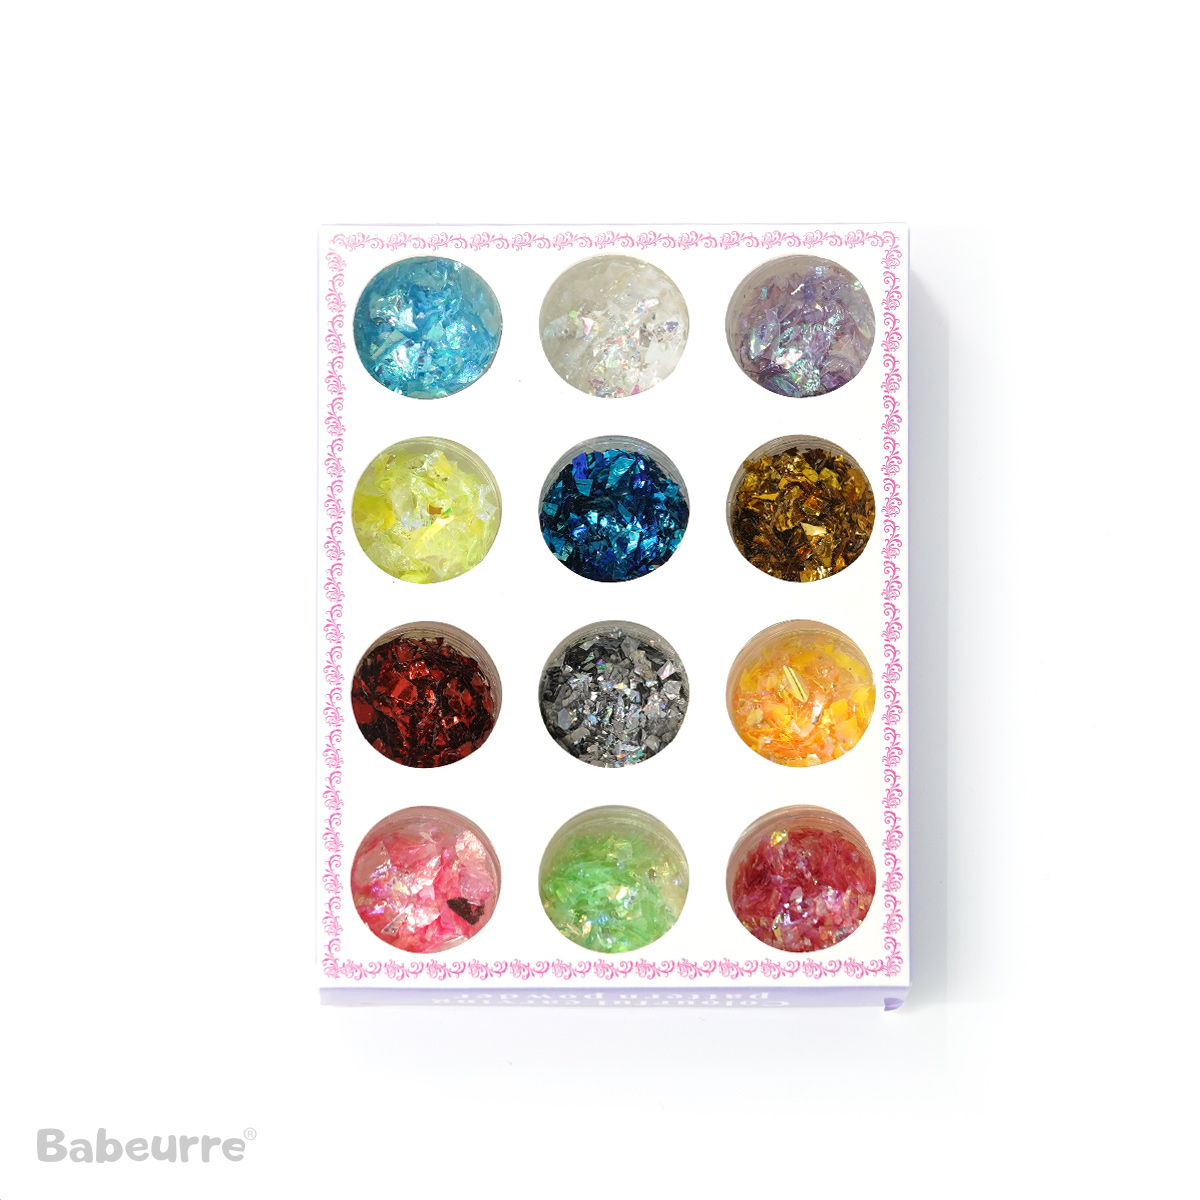 Shining Art Glitter Sparkly Paillette Mixed Color 12 box set